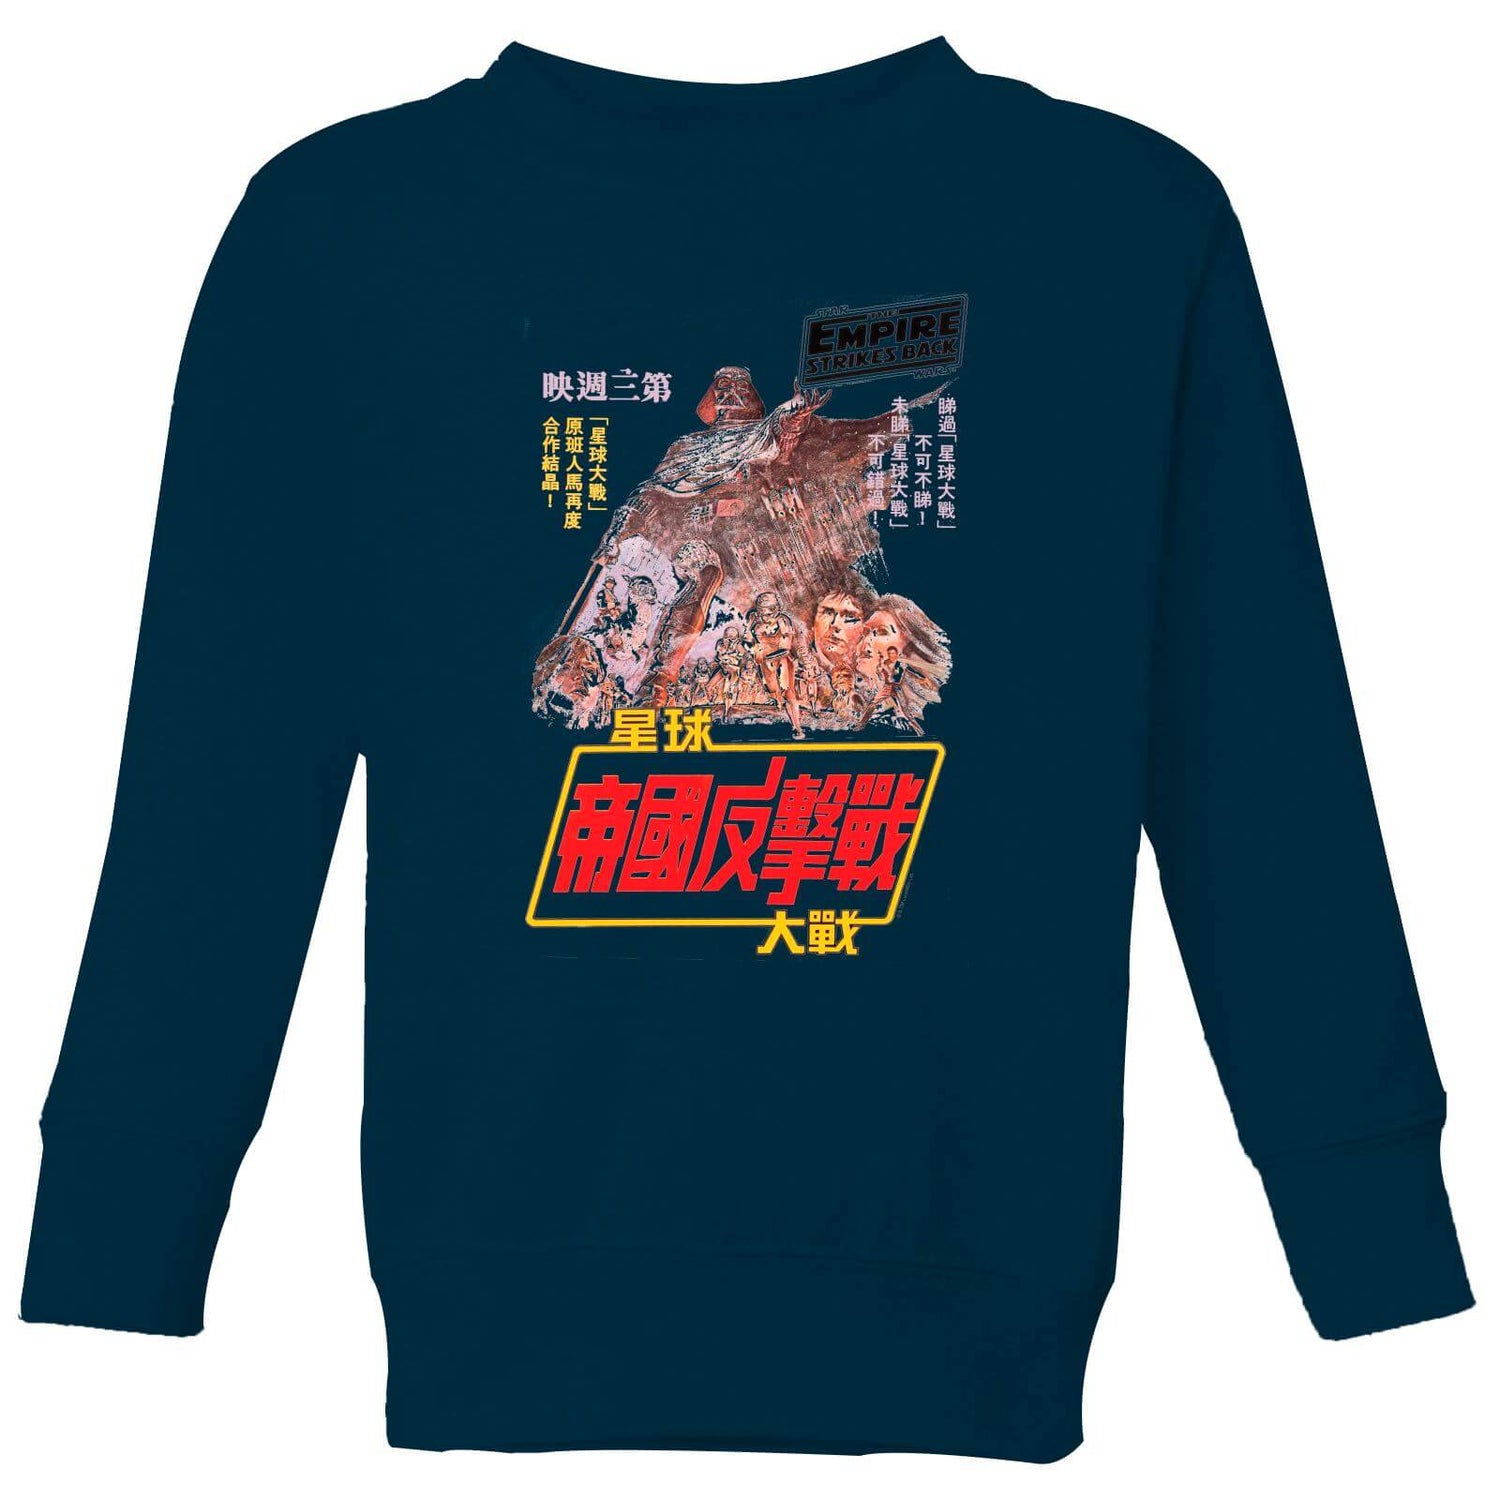 Star Wars Empire Strikes Back Kanji Poster Kids' Sweatshirt - Navy